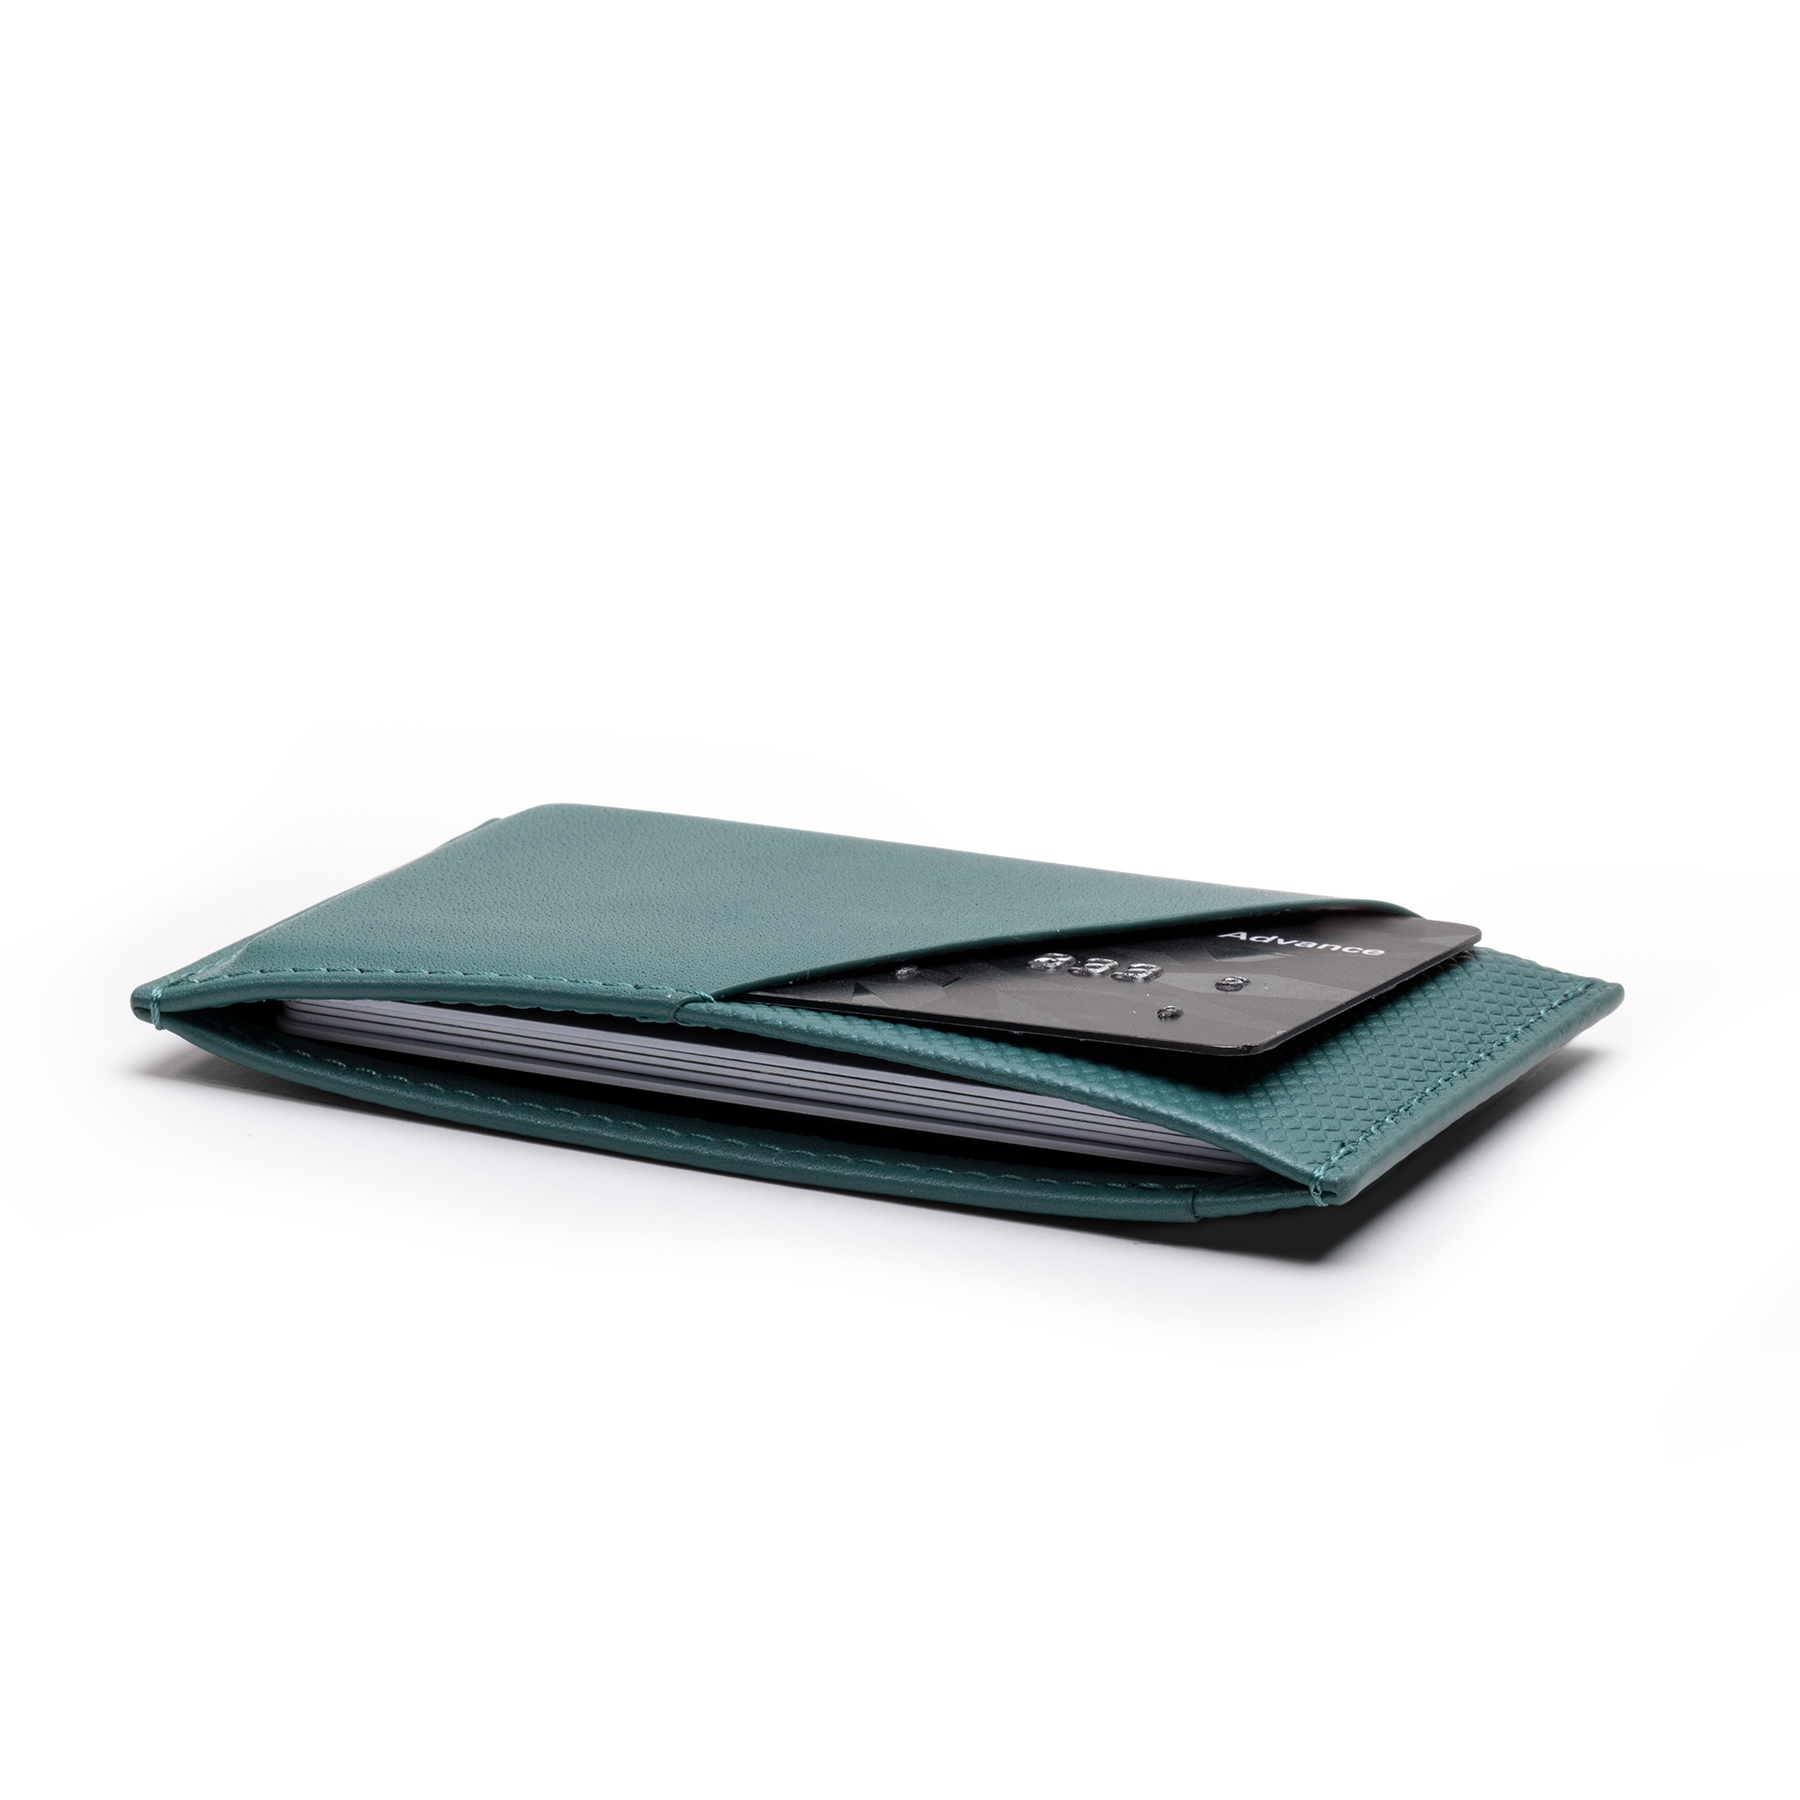 Light Navy folding card holder wallet, Compact Pocket organiser